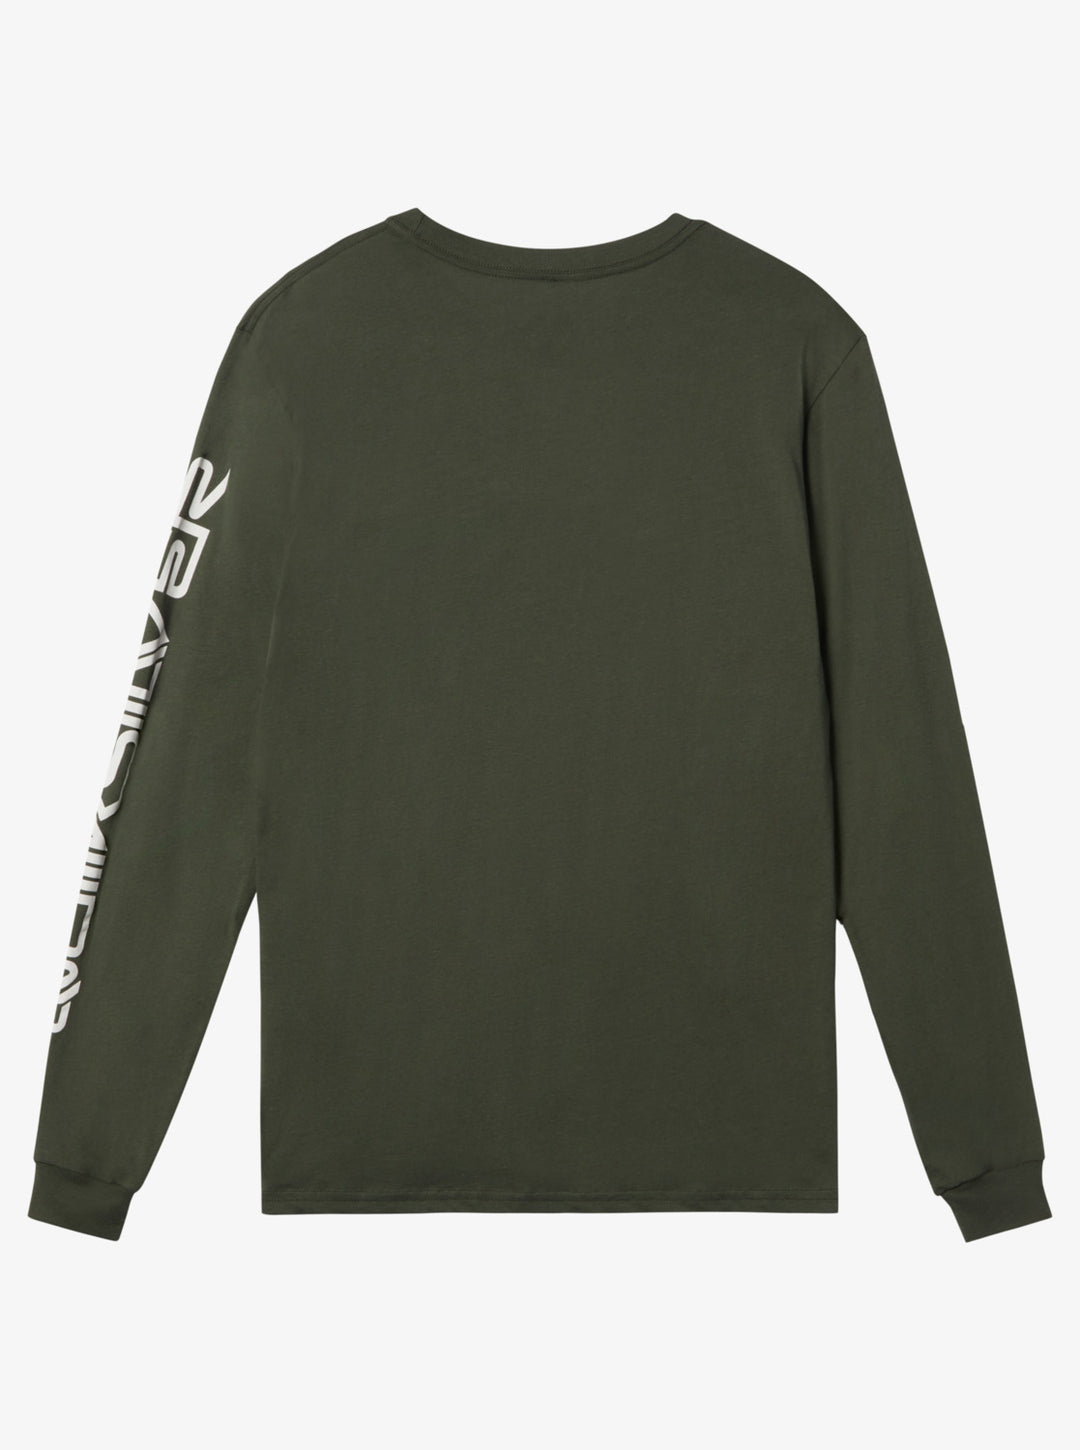 Quiksilver Omni Logo Long Sleeve T-Shirt - Climbing Ivy - Sun Diego Boardshop